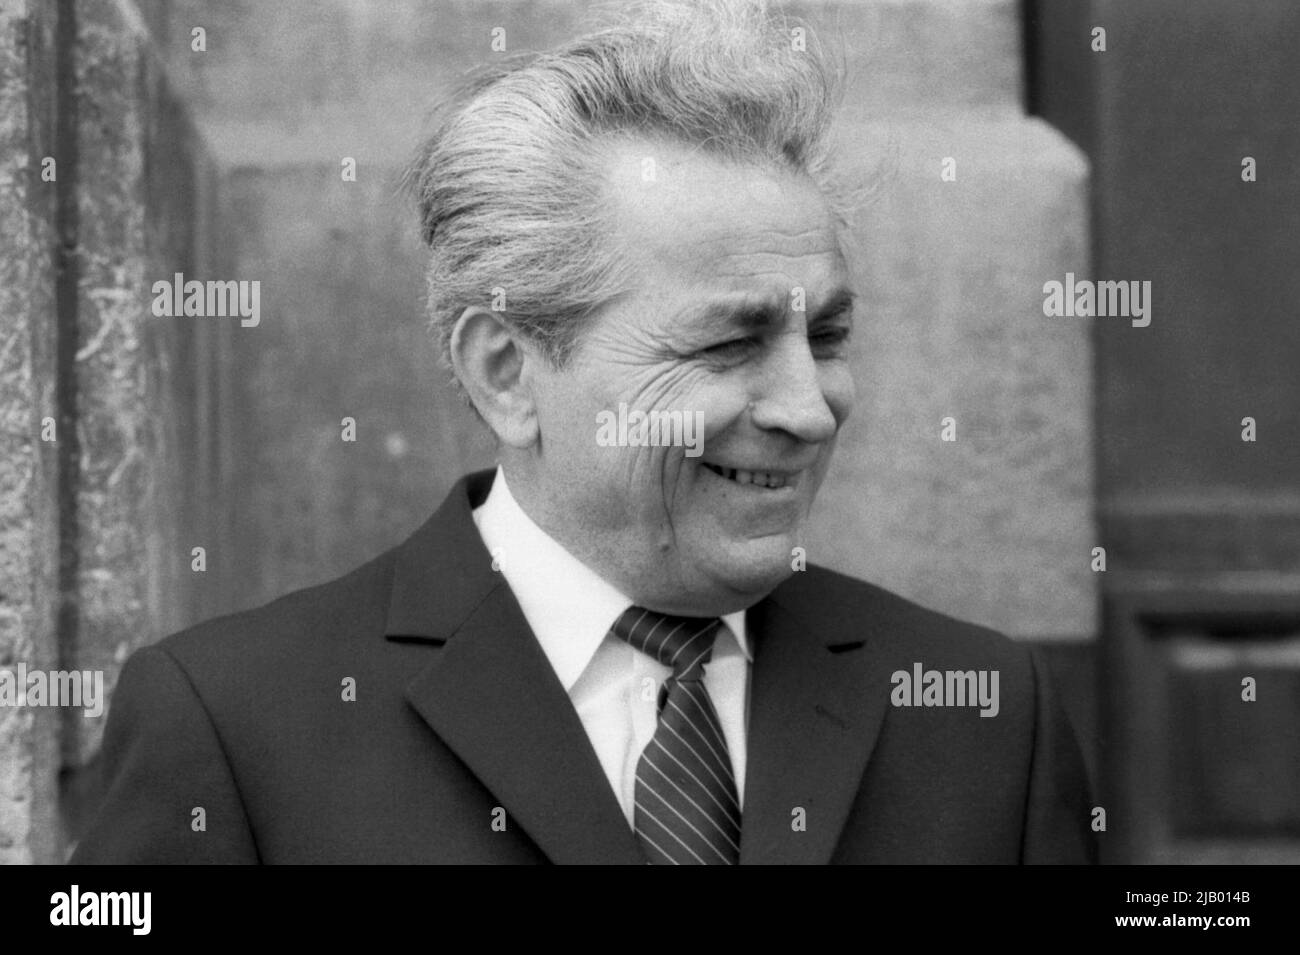 Bucharest, Romania, 1990. President of 'Steaua București' football (soccer) team,  Ion Alecsandrescu. Stock Photo